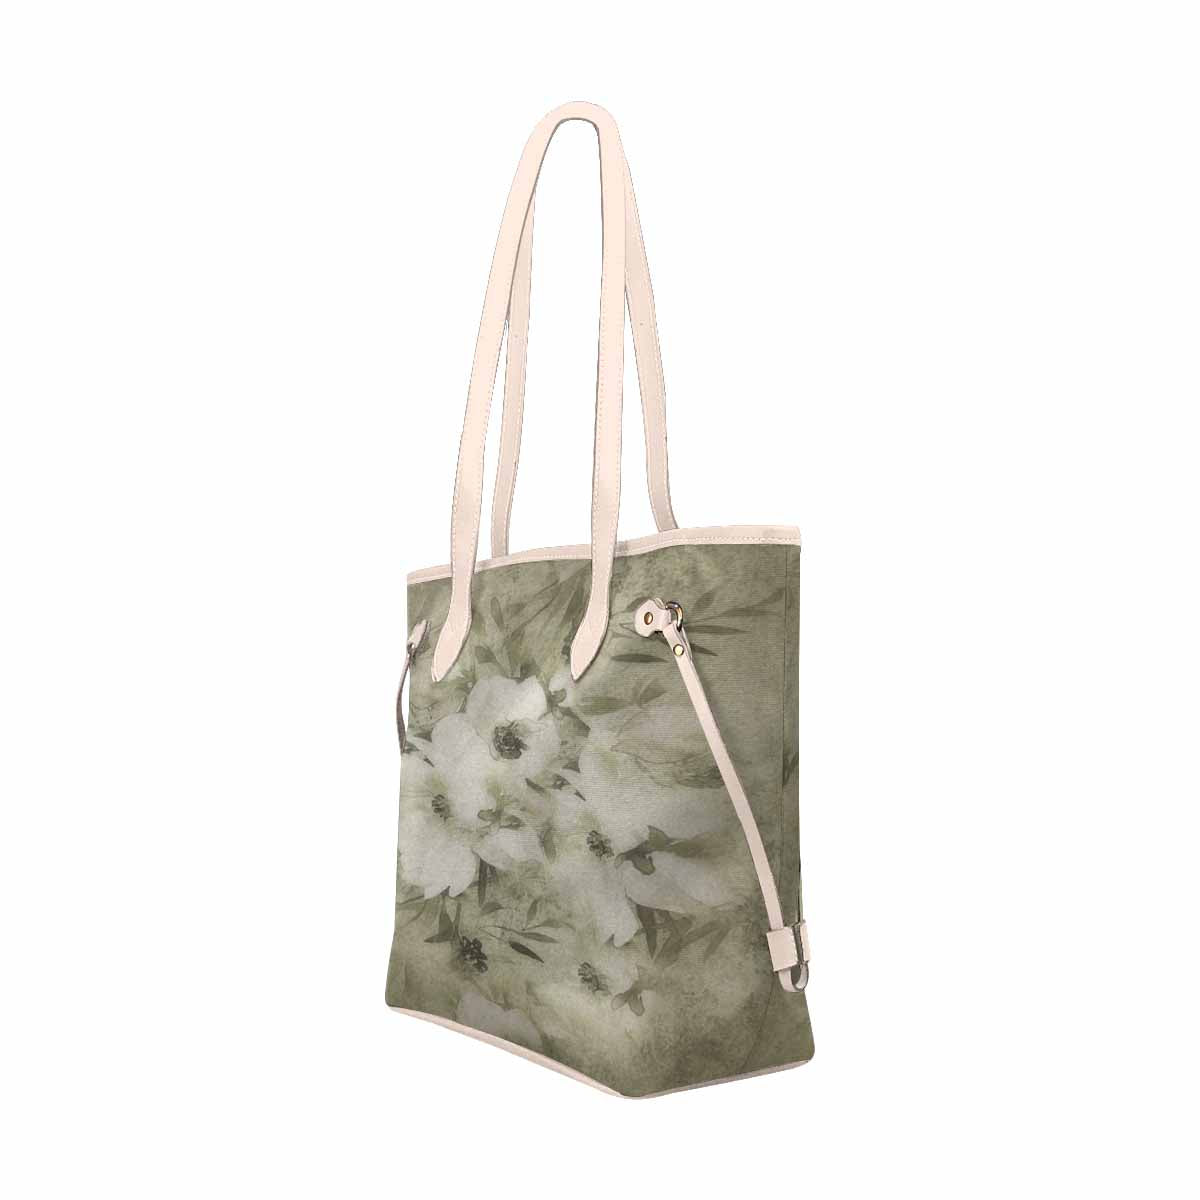 Vintage Floral Handbag, Classic Handbag, Mod 1695361 Design 03x, BEIGE/TAN TRIM